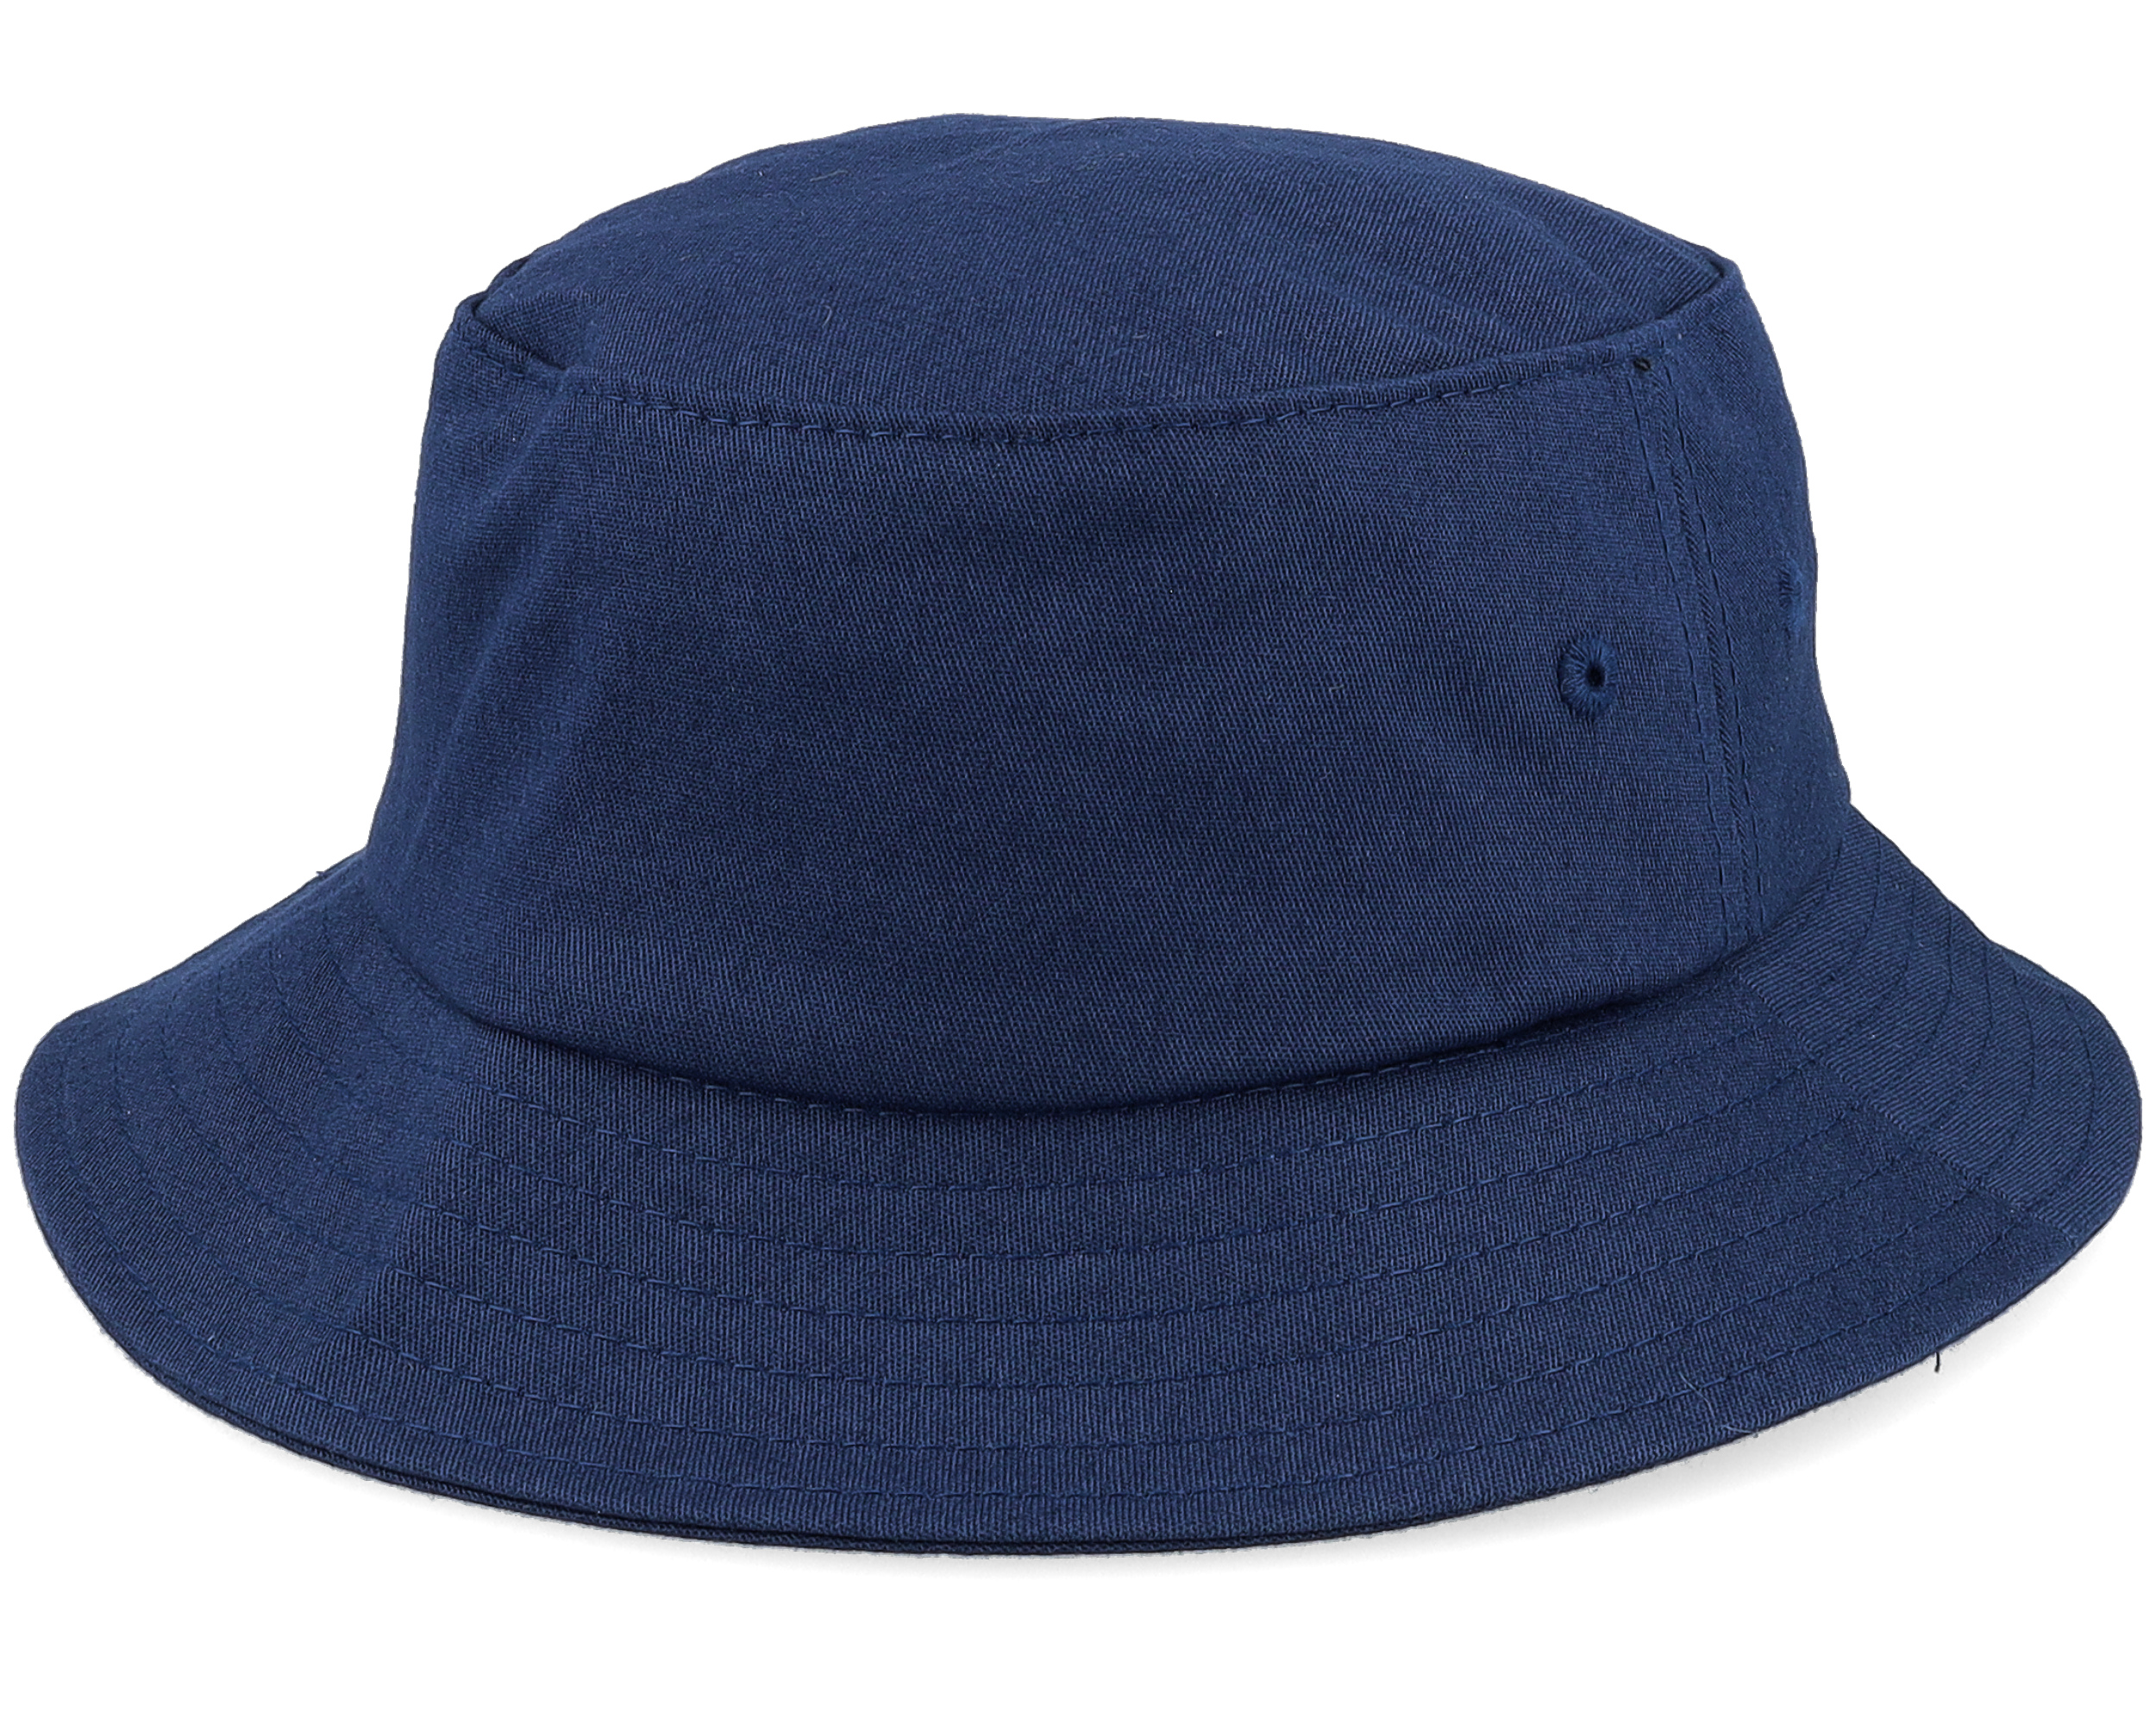 Kids Navy Flexfit Bucket - Flexfit hat